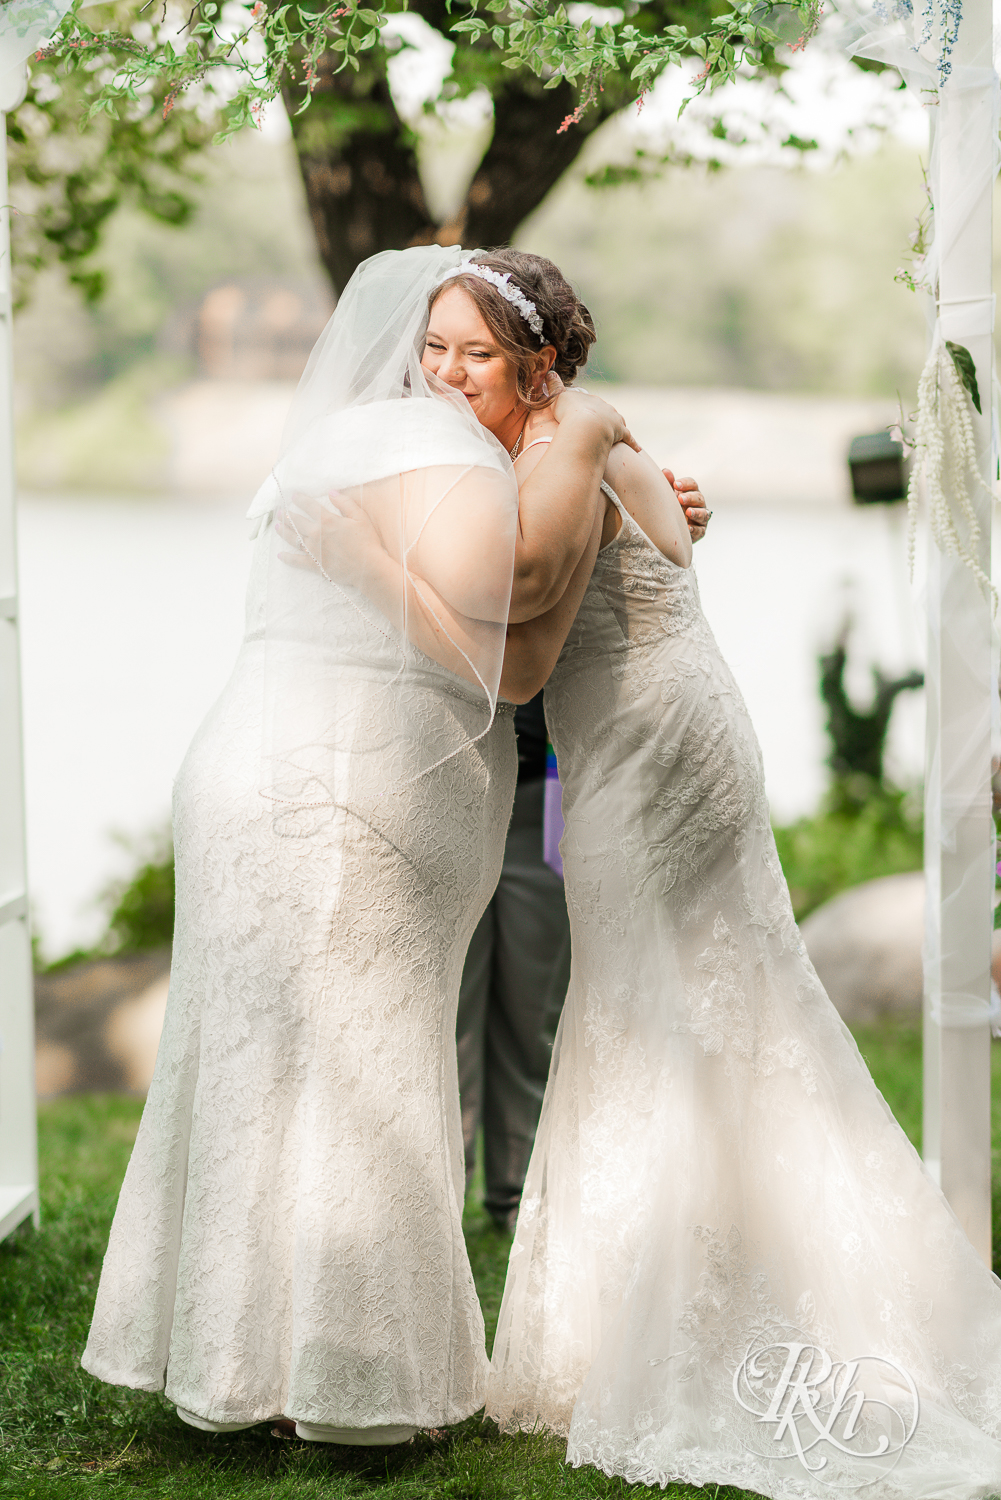 Lesbian brides hug during outdoor wedding ceremony in Minnesota.